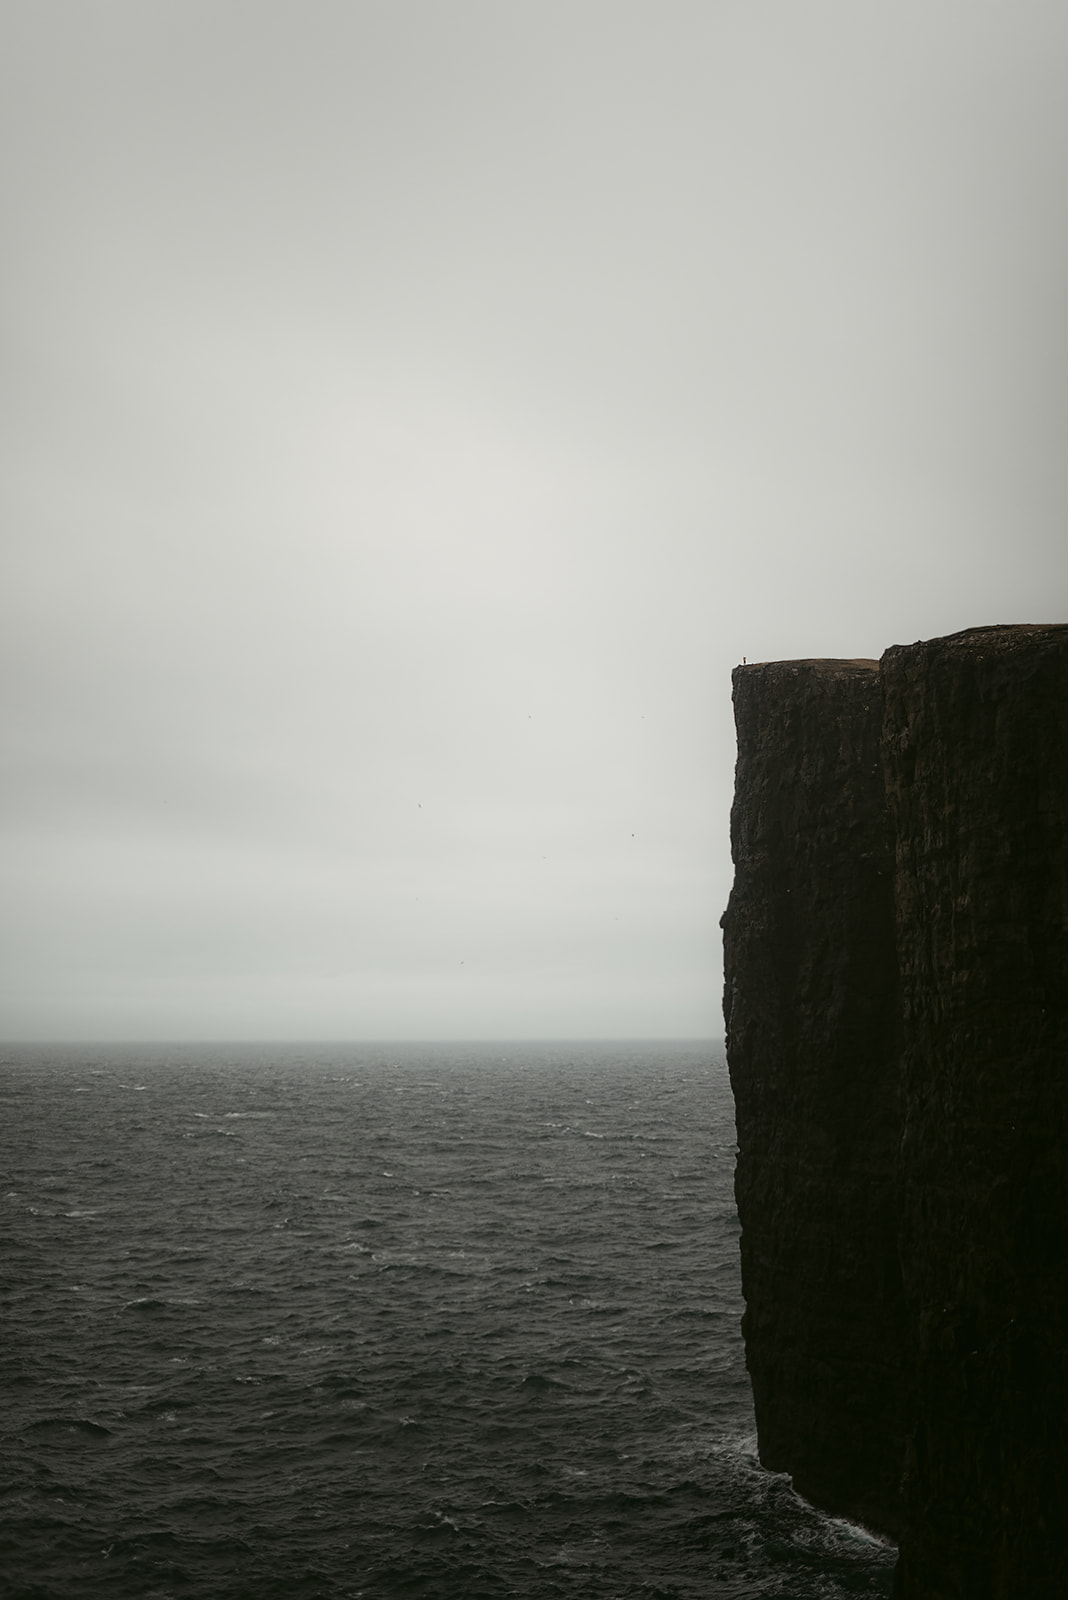 Steep vertical cliff against dark, cloudy sky